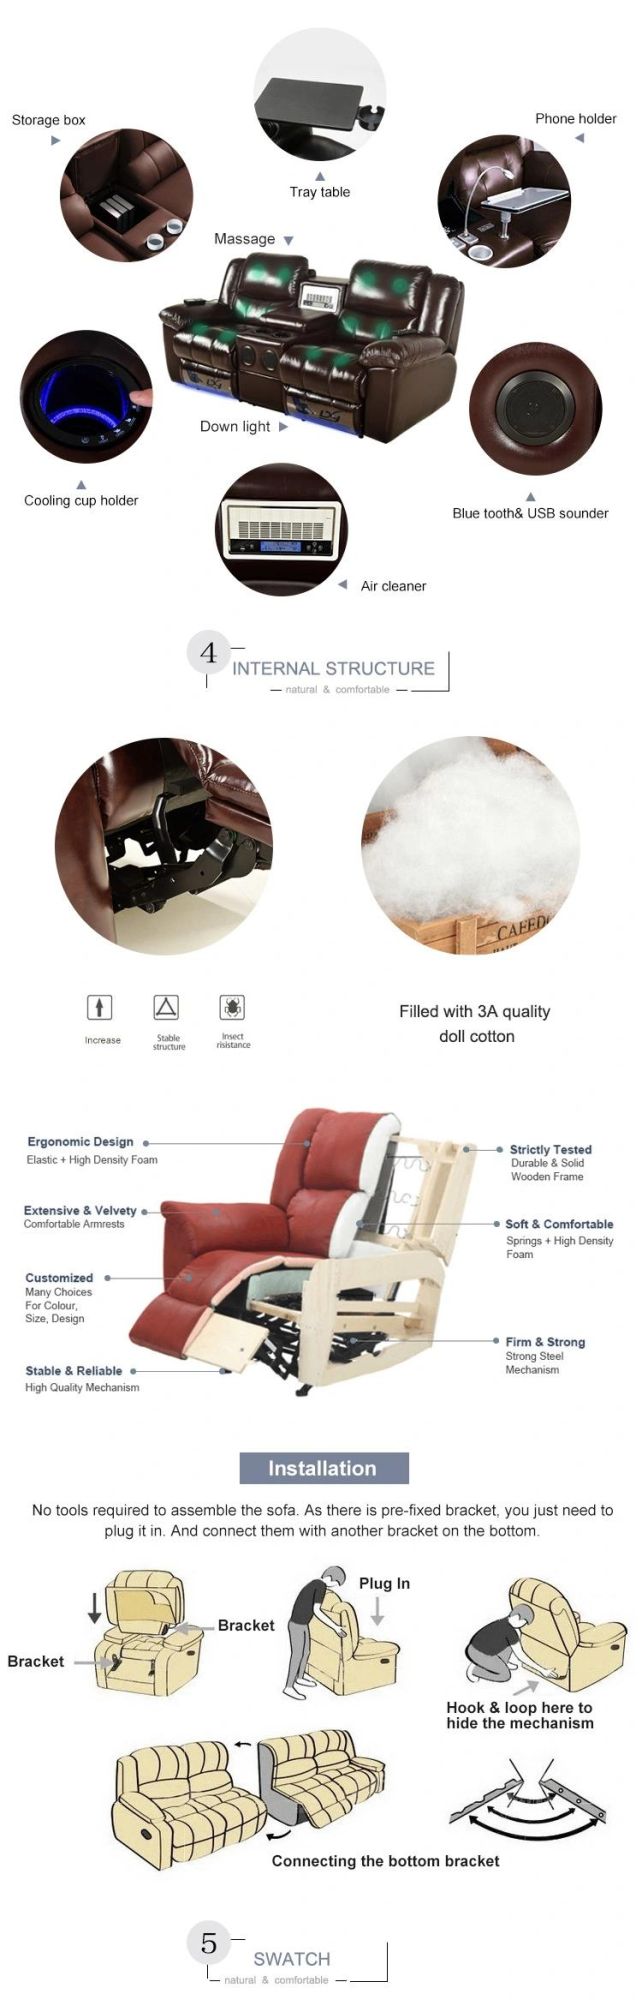 Fabric Hotel Zero Gravity Recliner Single Lift Chair Furniture